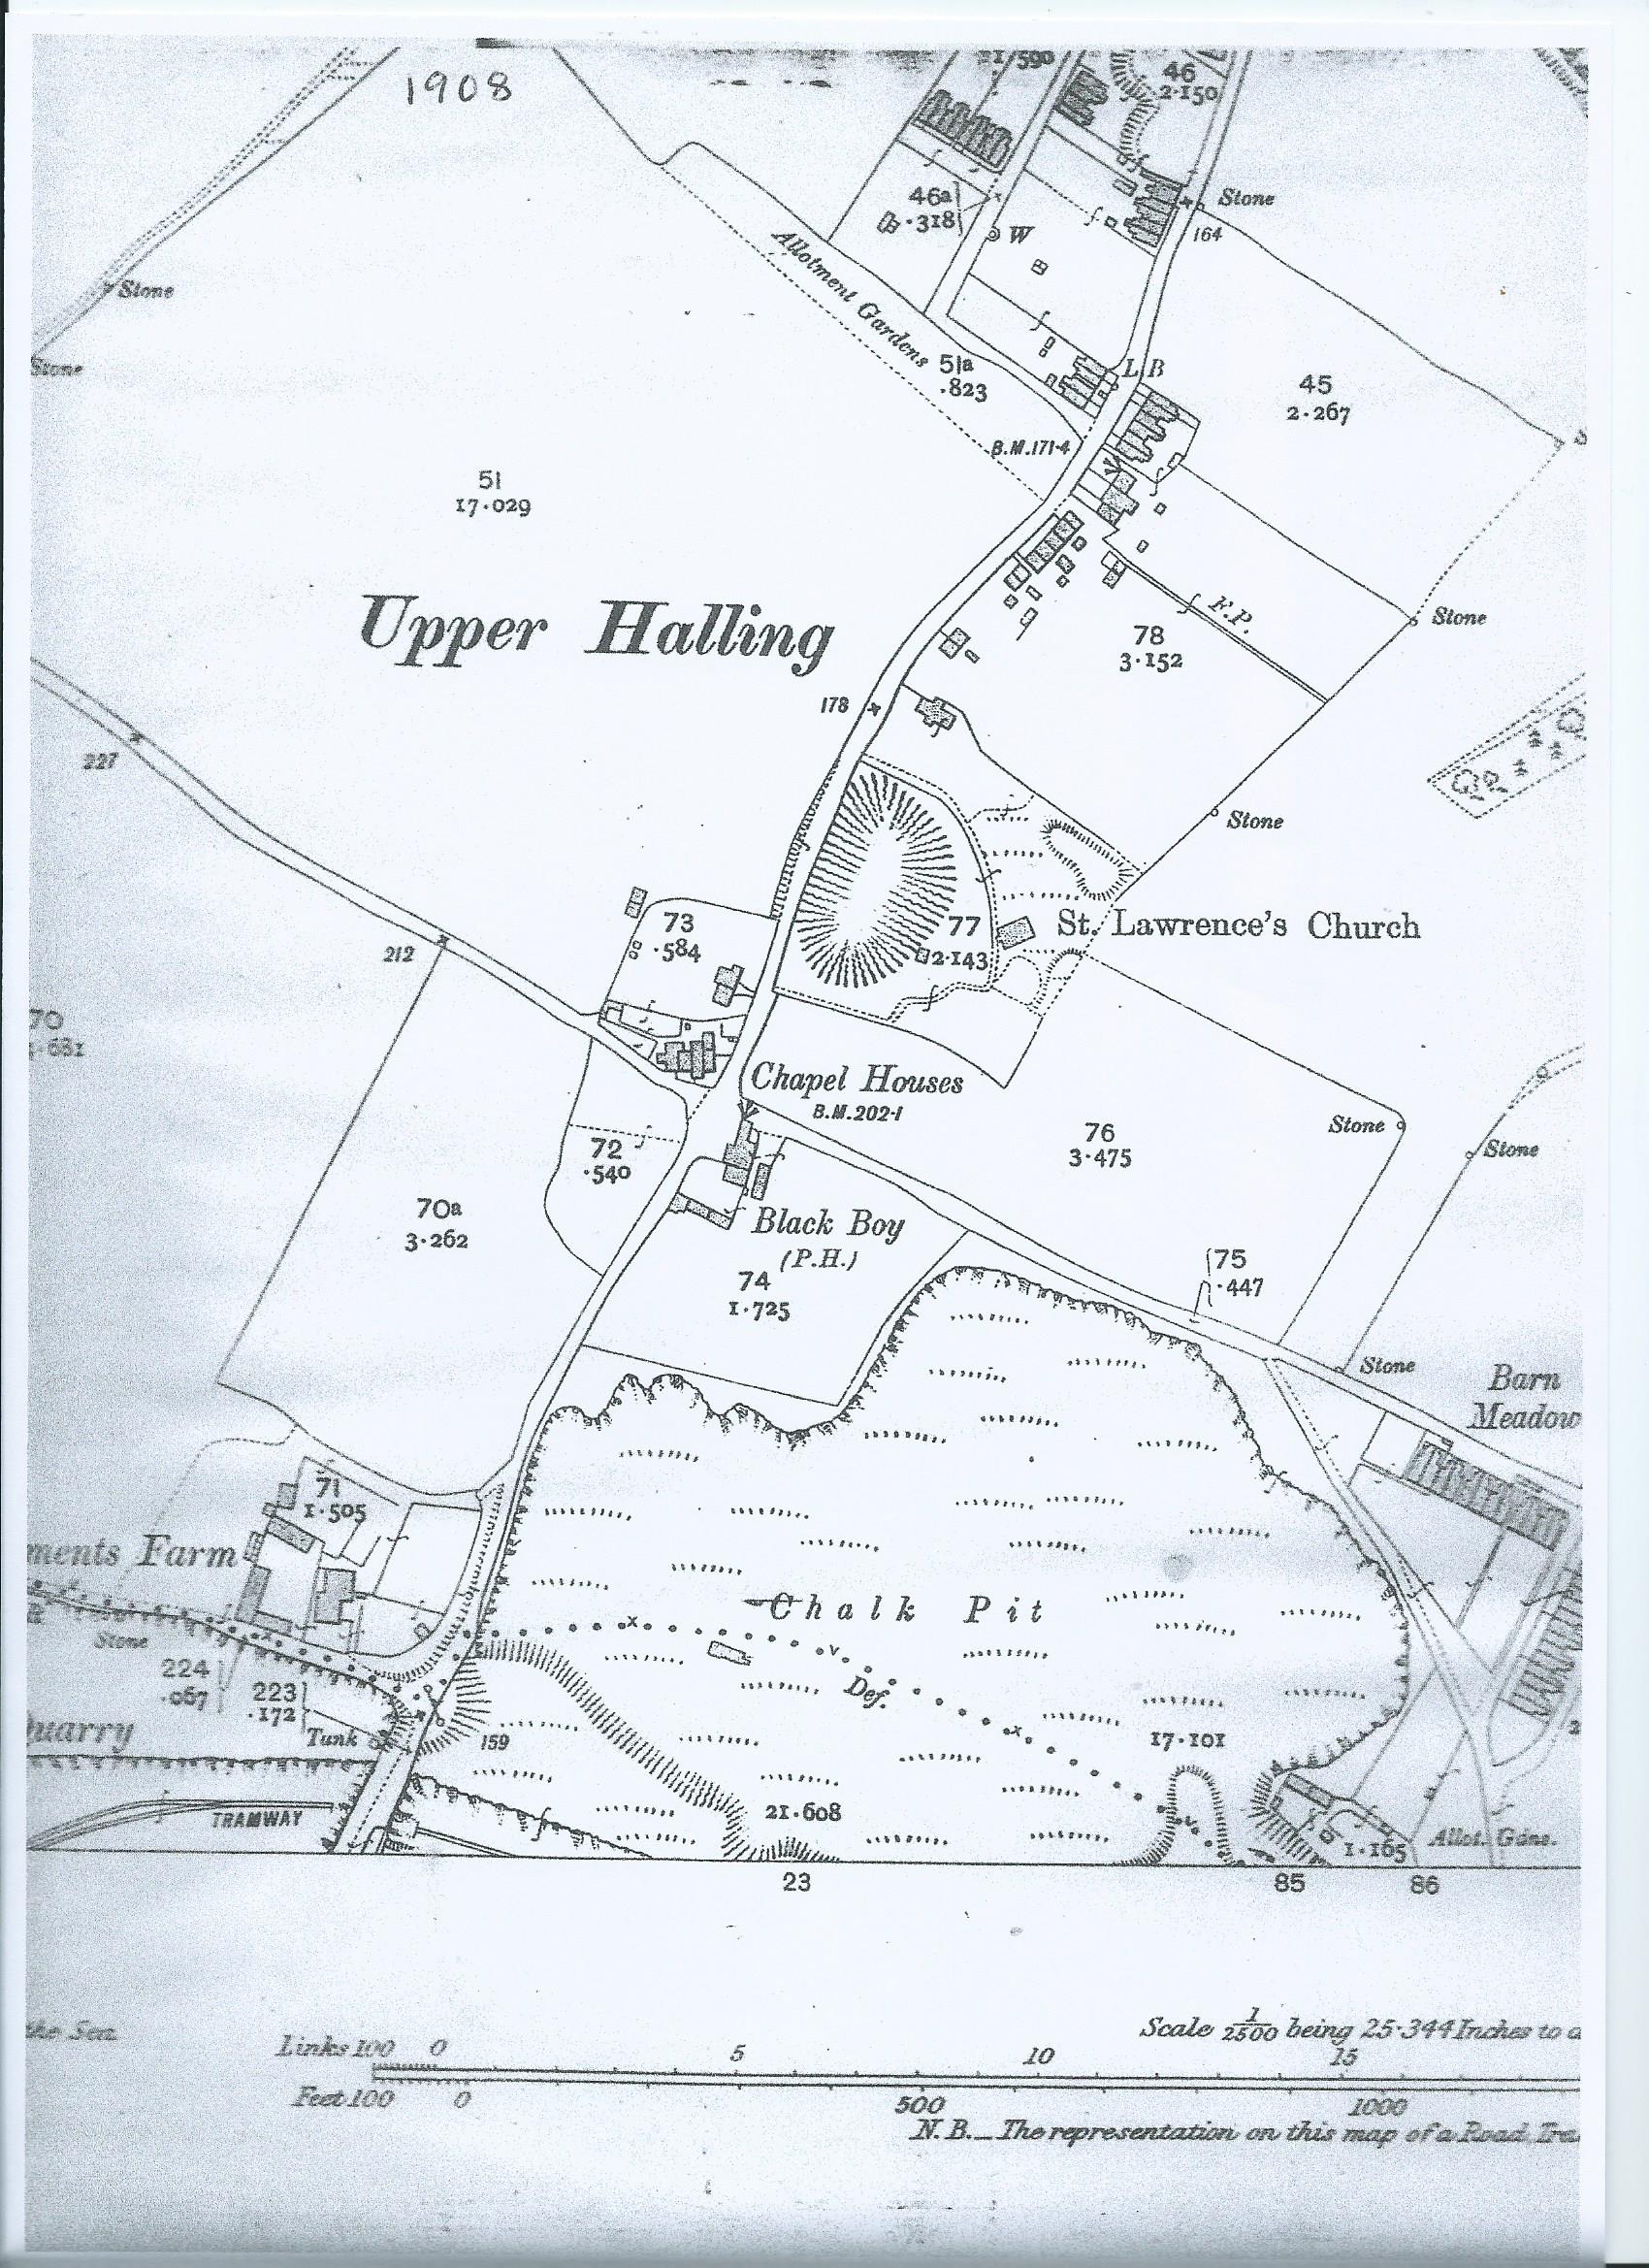 Upper Halling circa 1908